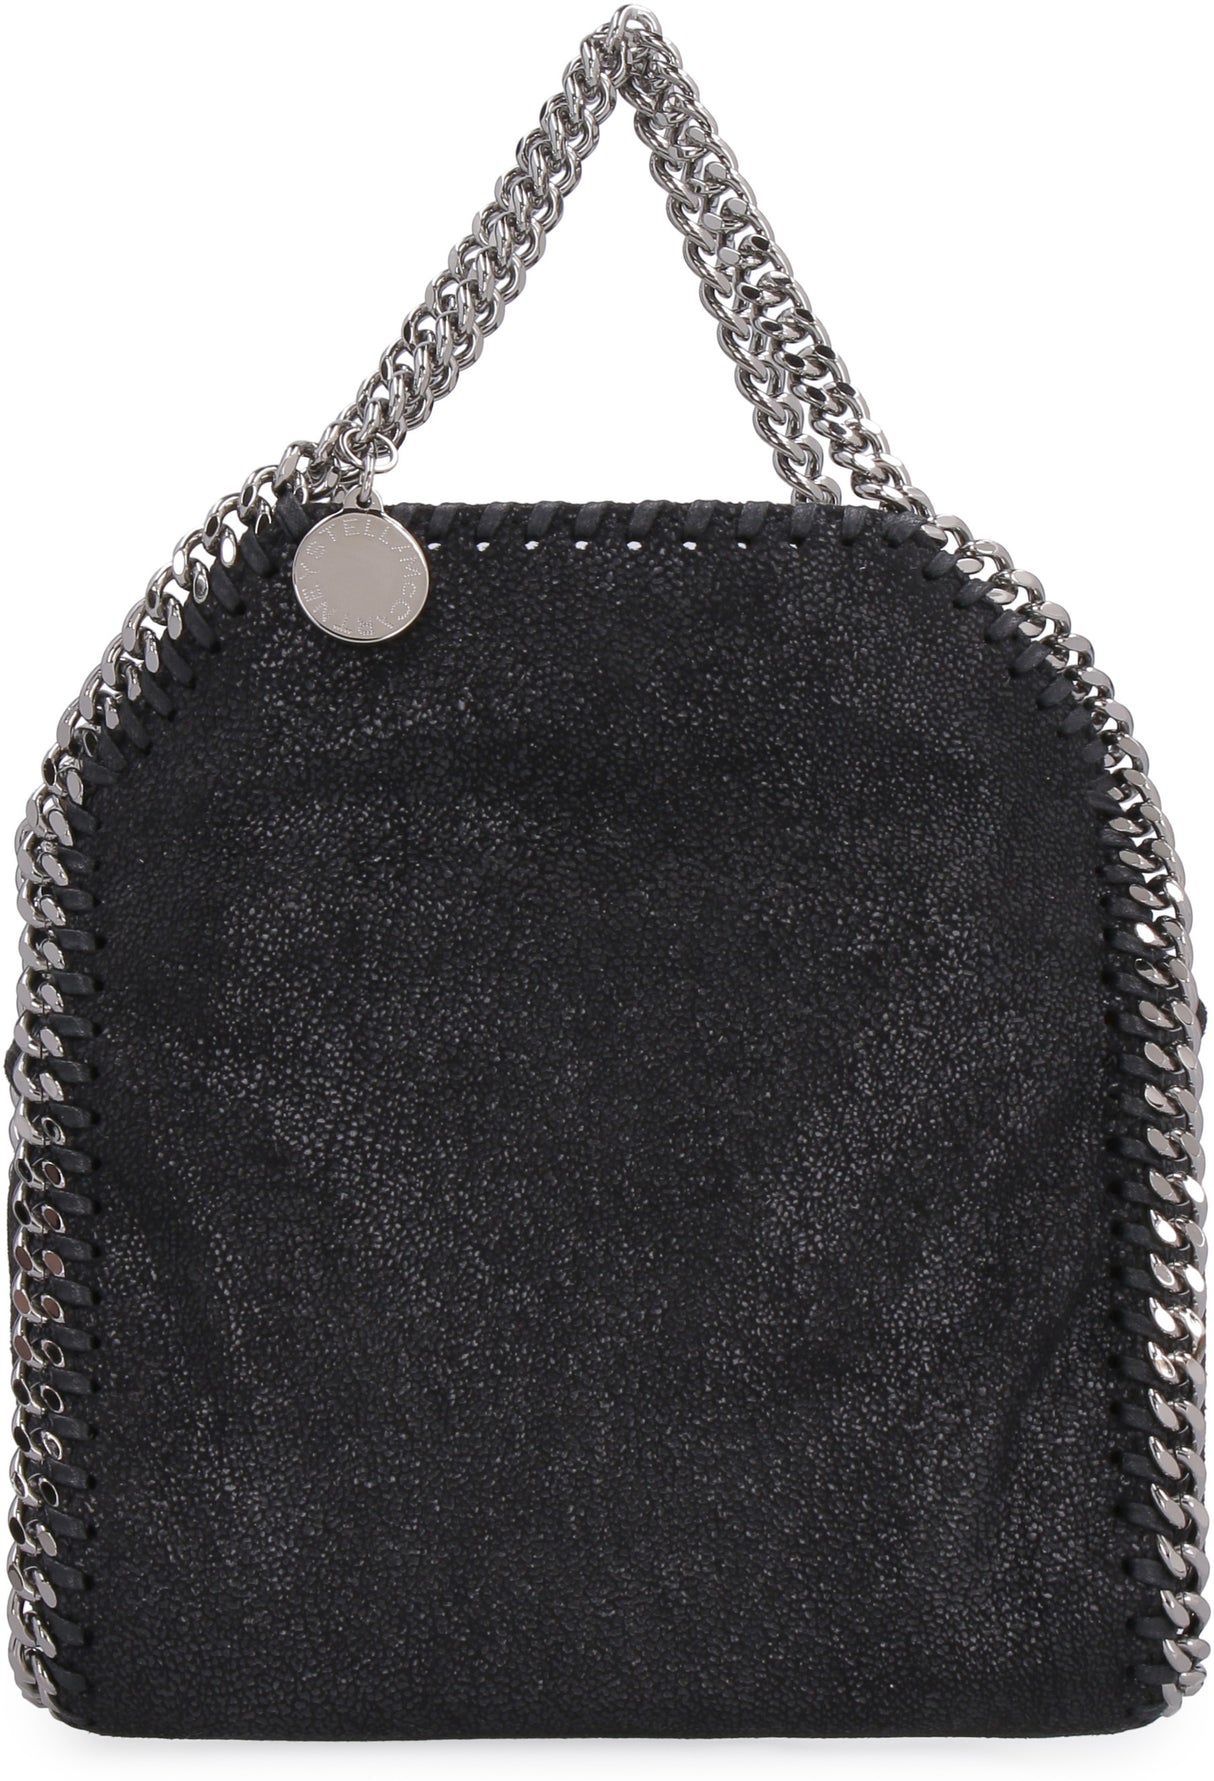 STELLA MCCARTNEY Black Micro Falabella Tote Handbag for Women